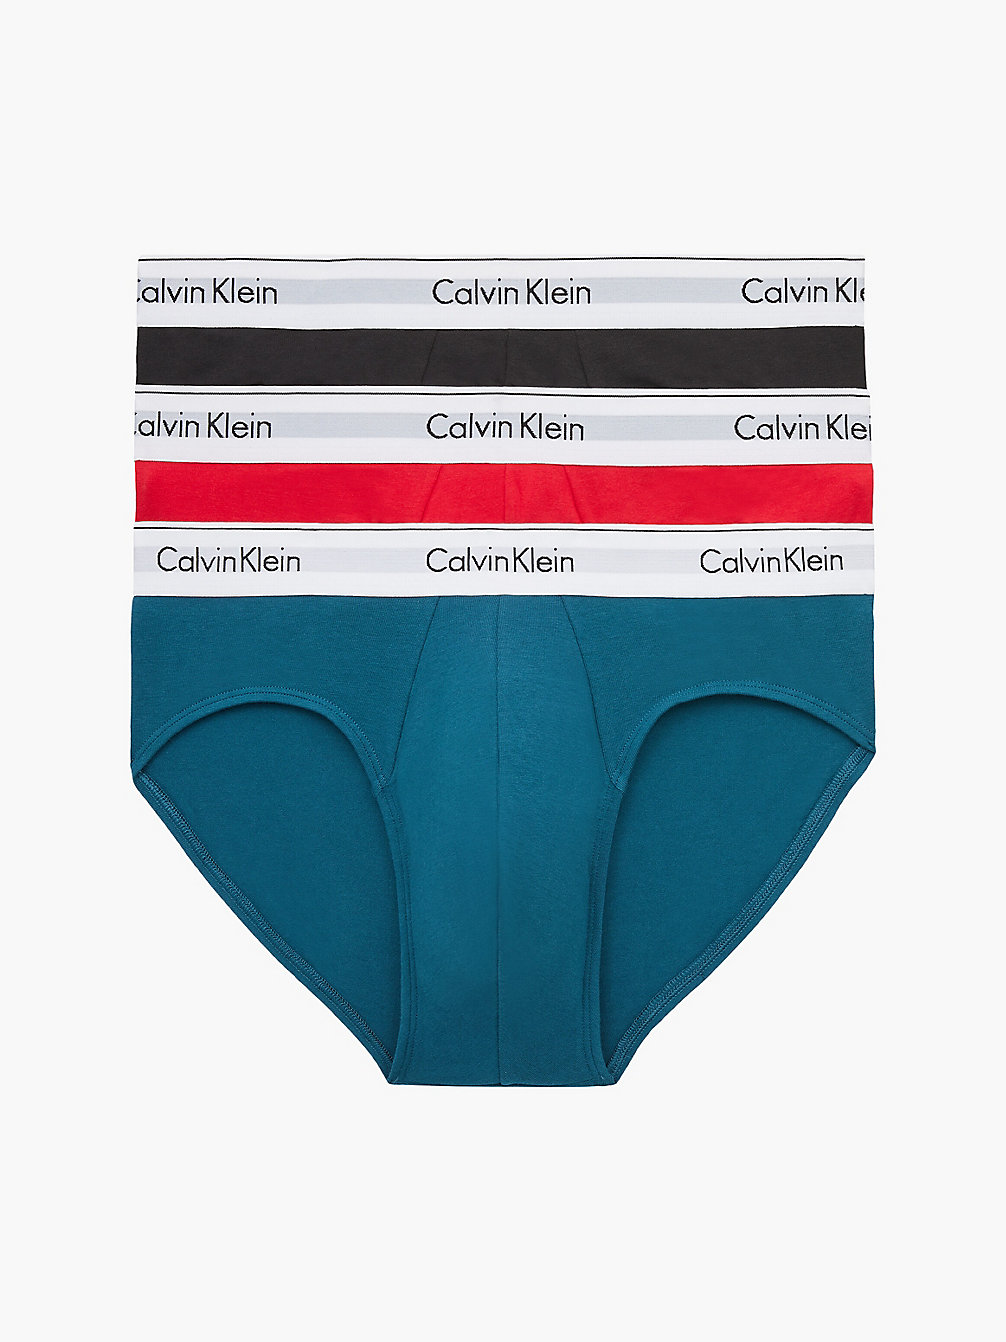 LEGION BLUE/ EXACT/ BLACK > Комплект брифов 3 шт. - Modern Cotton > undefined женщины - Calvin Klein